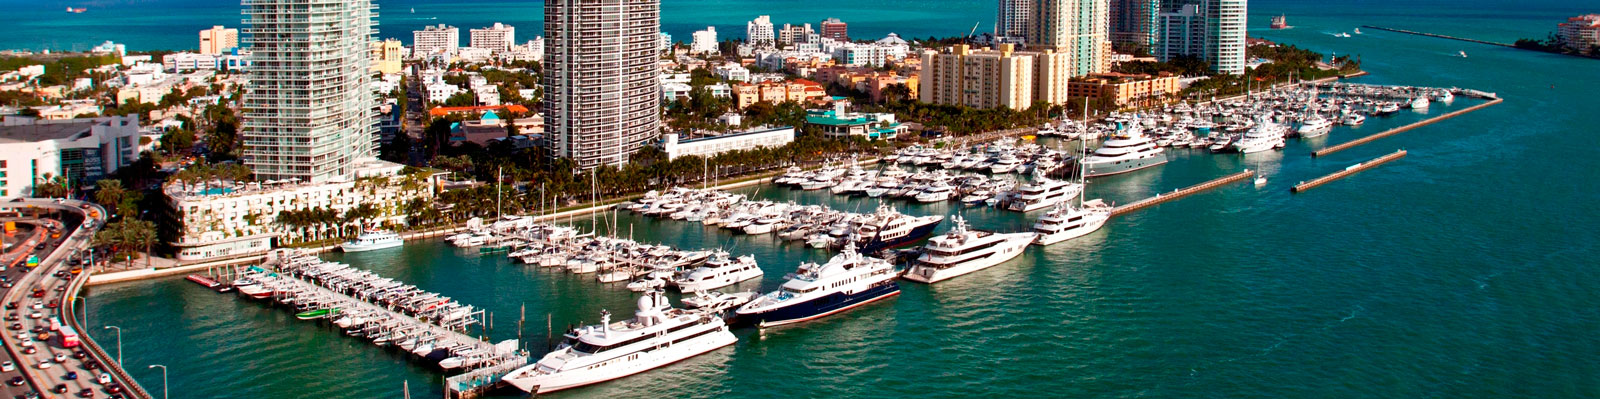 A Destination Marina – Bahia Mar Resort and Marina in Fort Lauderdale, Fl